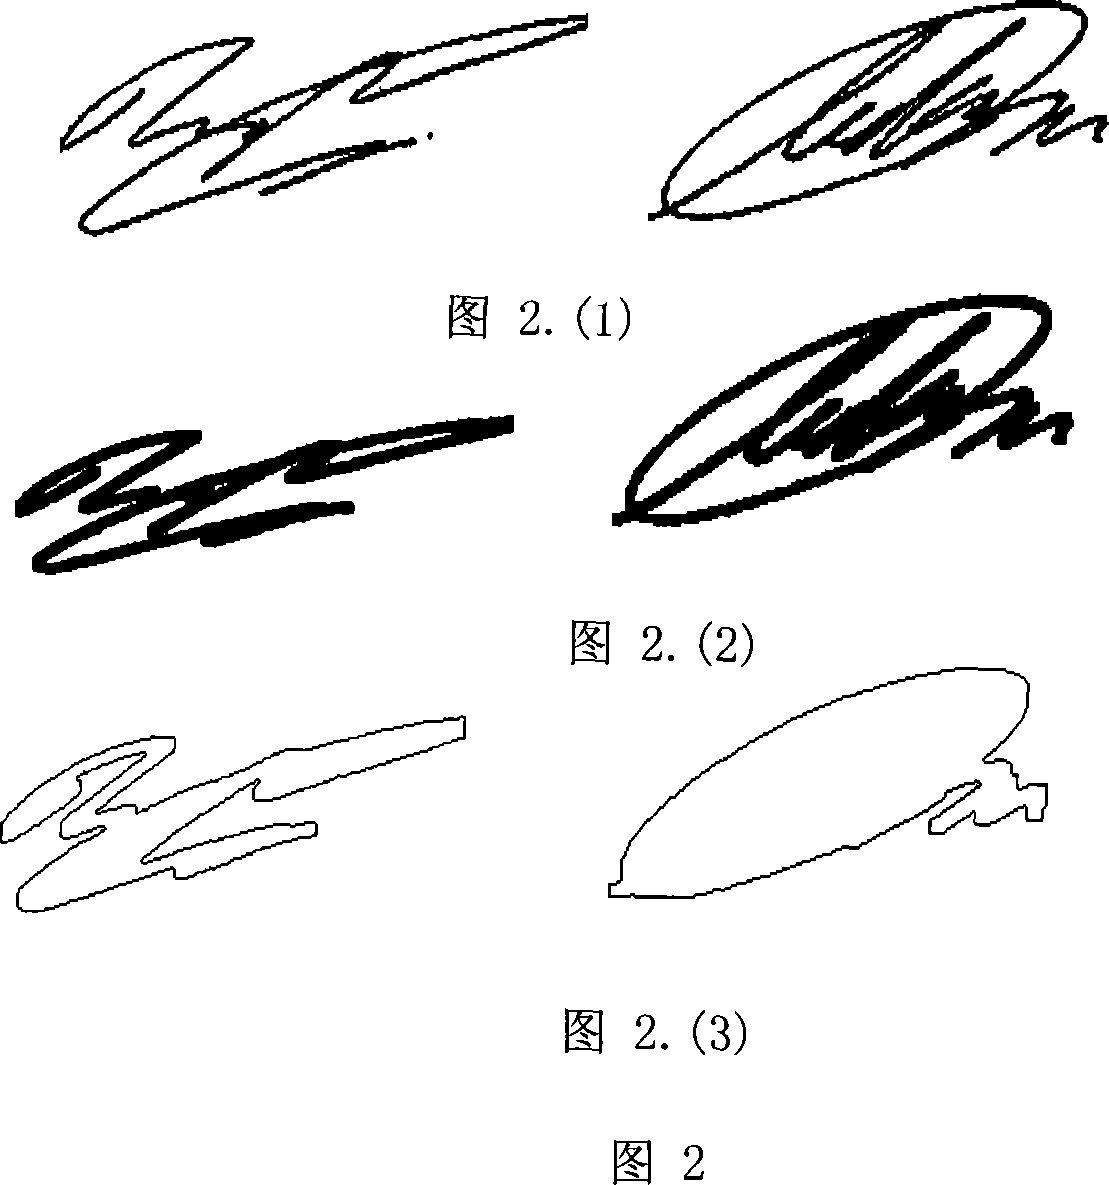 Signature identifying method